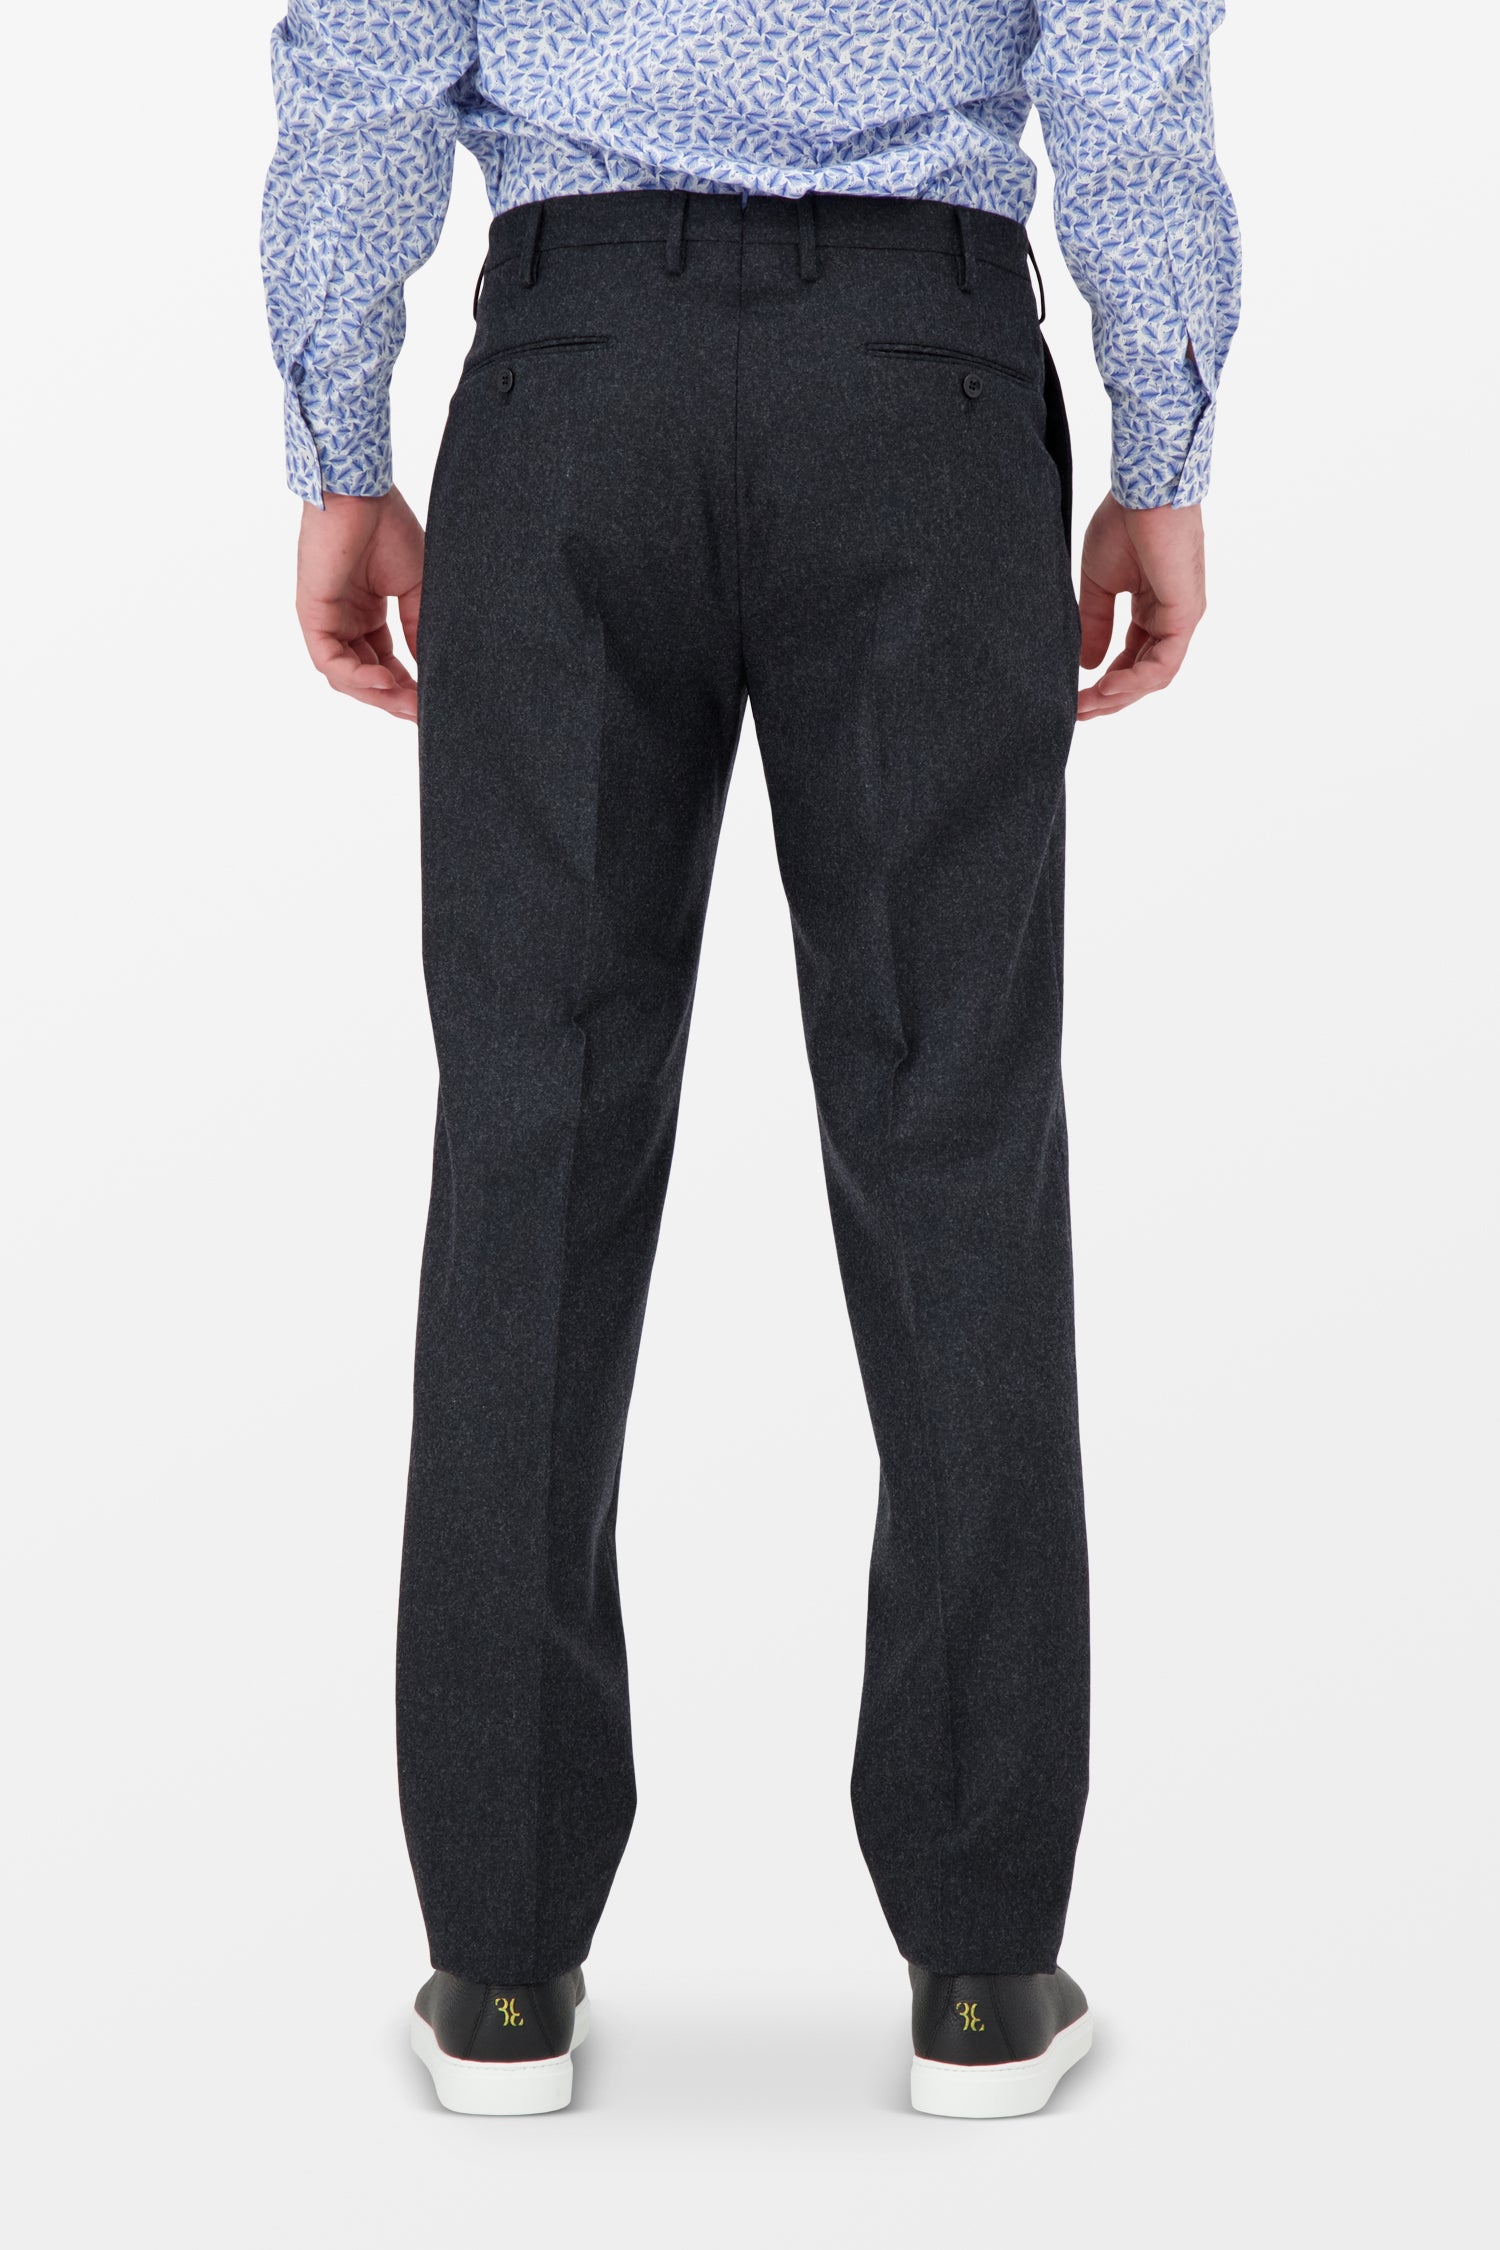 Incotex Dark Grey Trousers